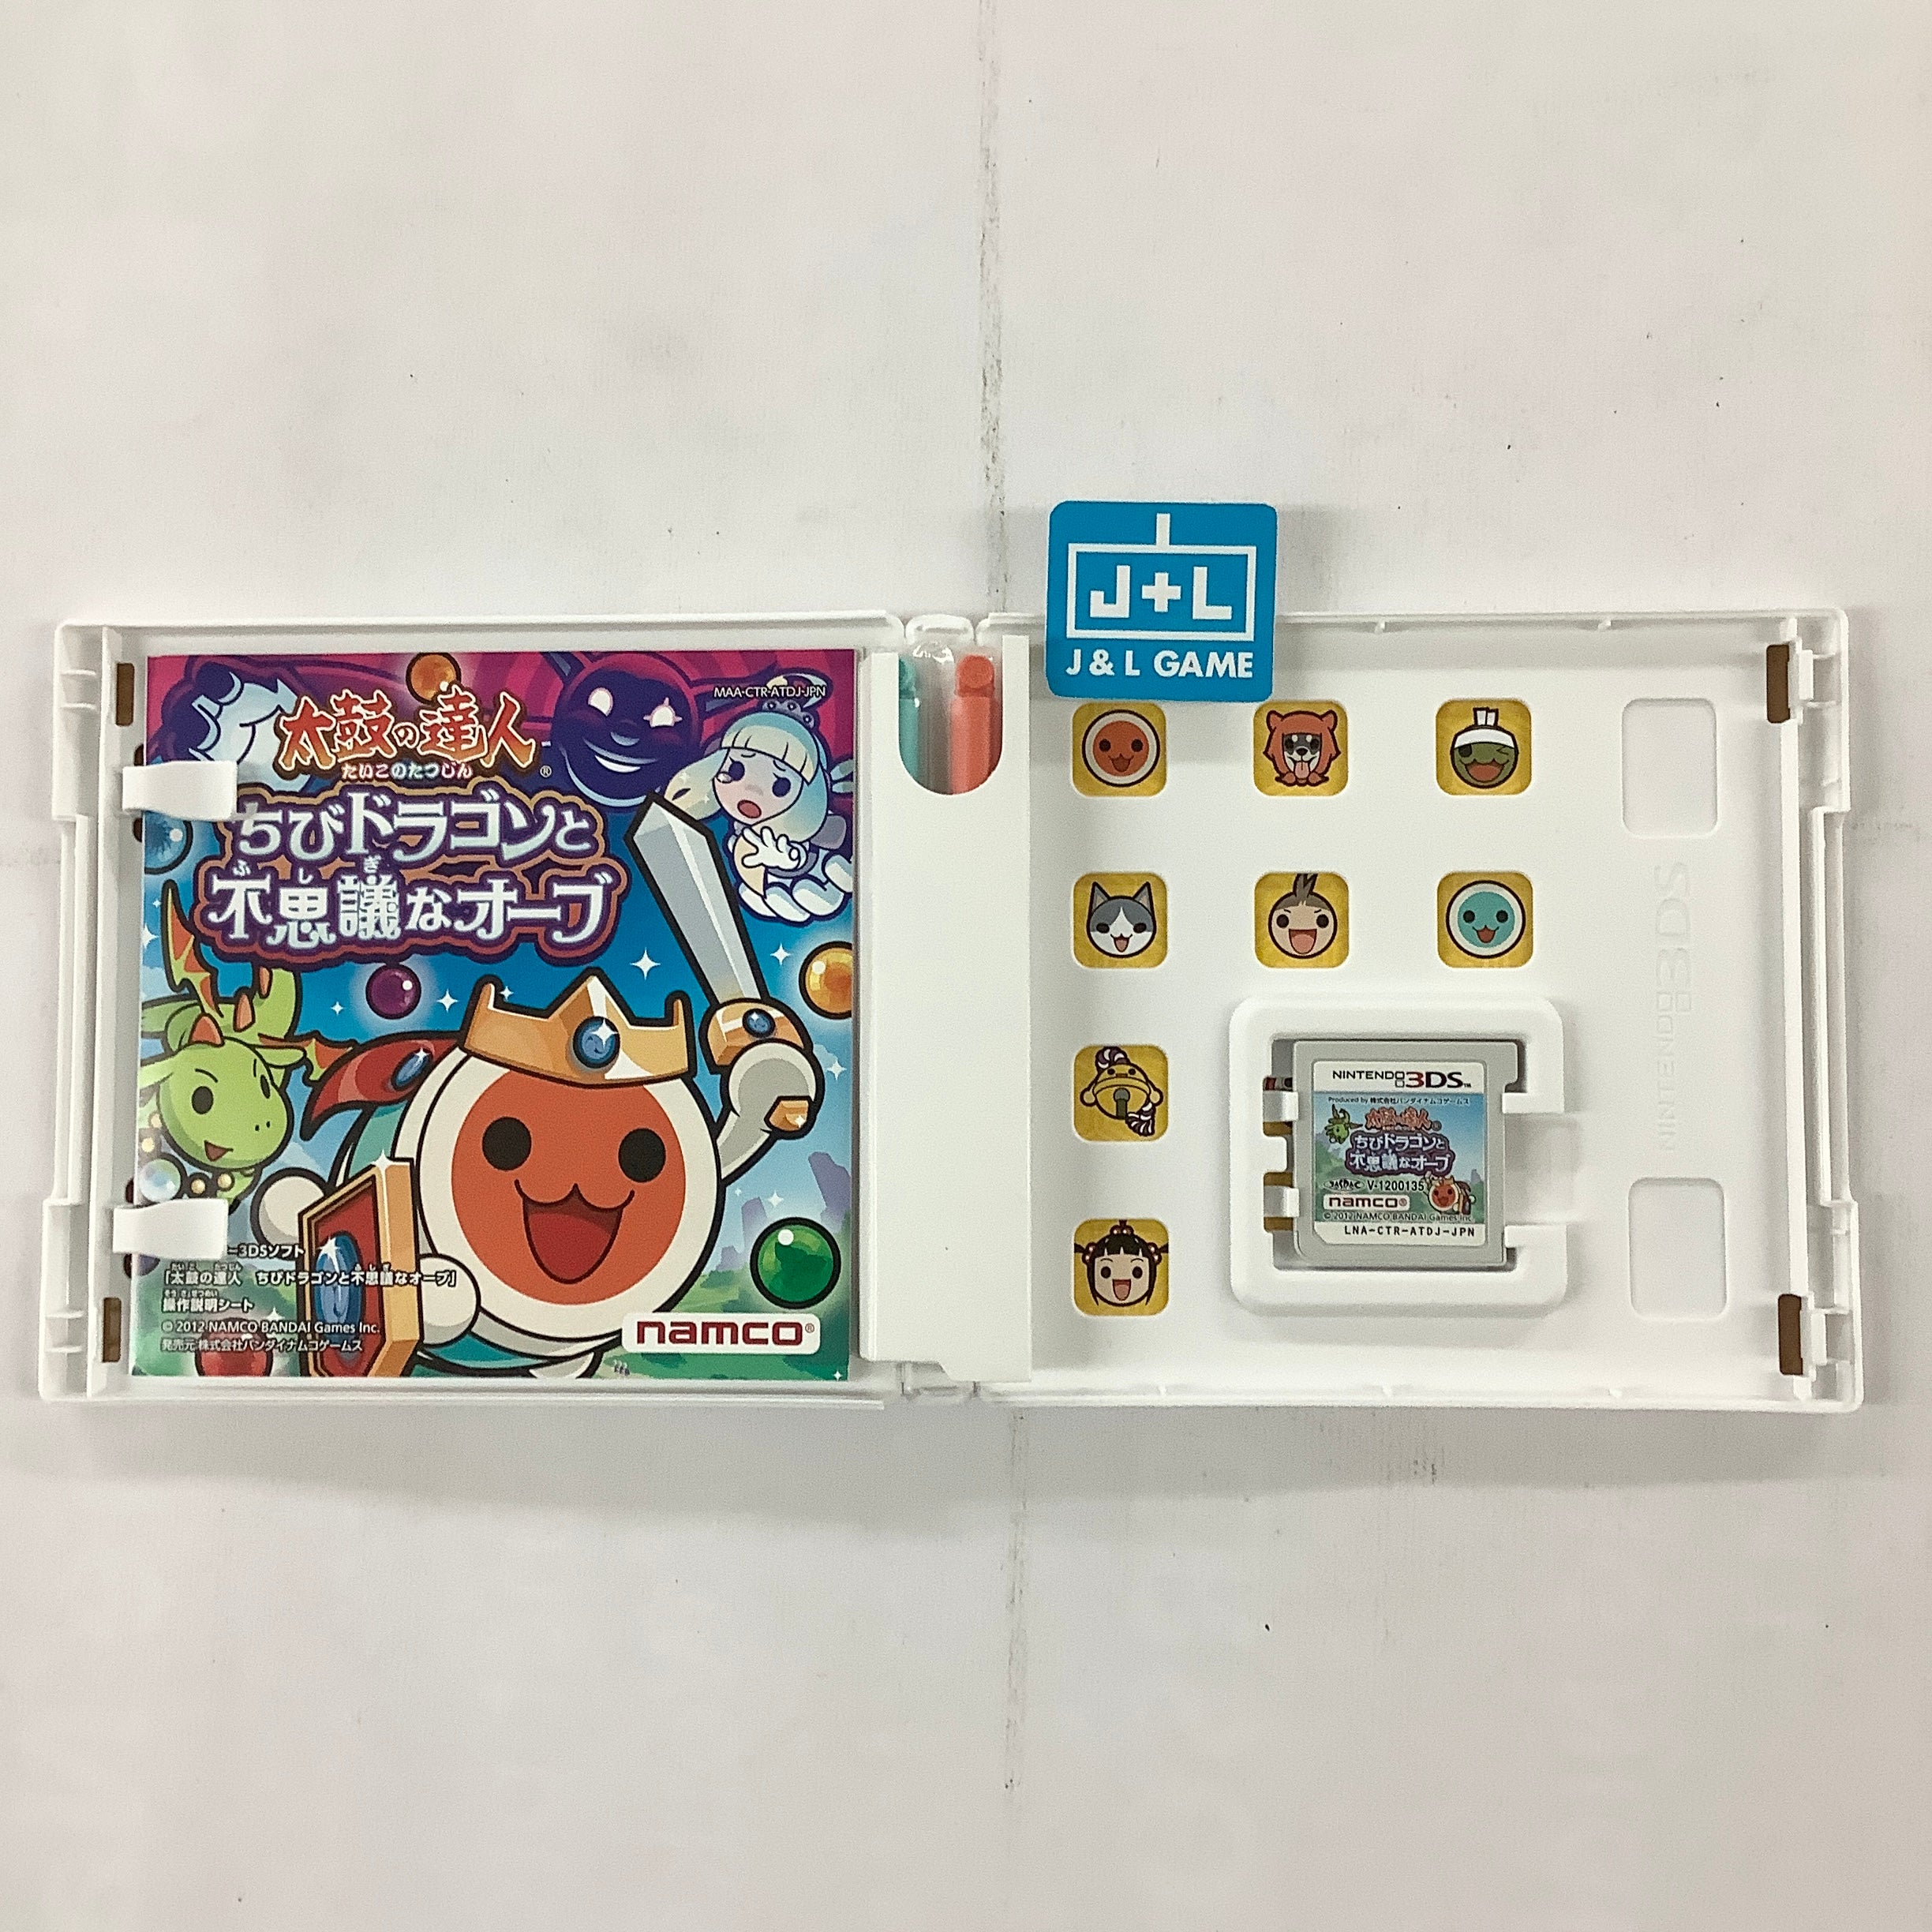 Taiko no Tatsujin: Chibi Dragon to Fushigi na Orb - Nintendo 3DS [Pre-Owned] (Japanese Import) Video Games Bandai Namco Games   